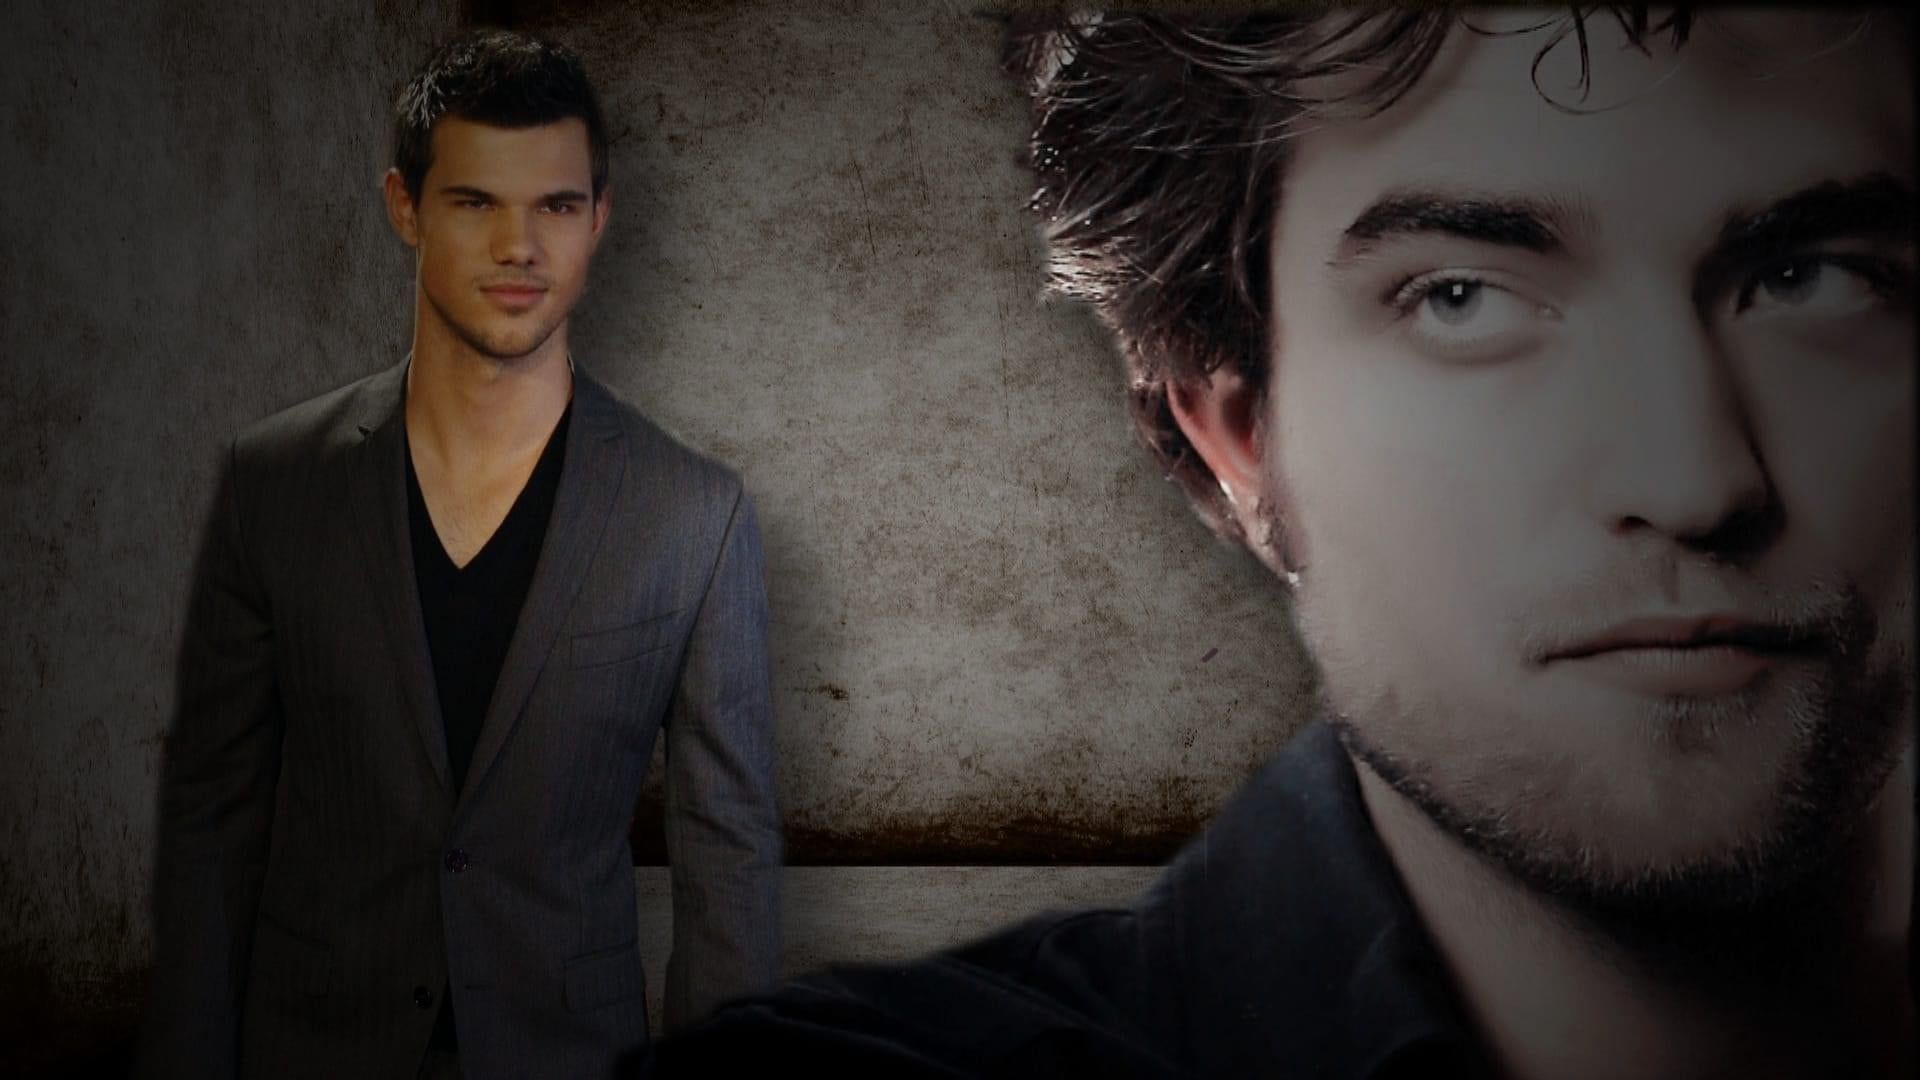 Twilight: The Robert Pattinson and Taylor Lautner Saga background